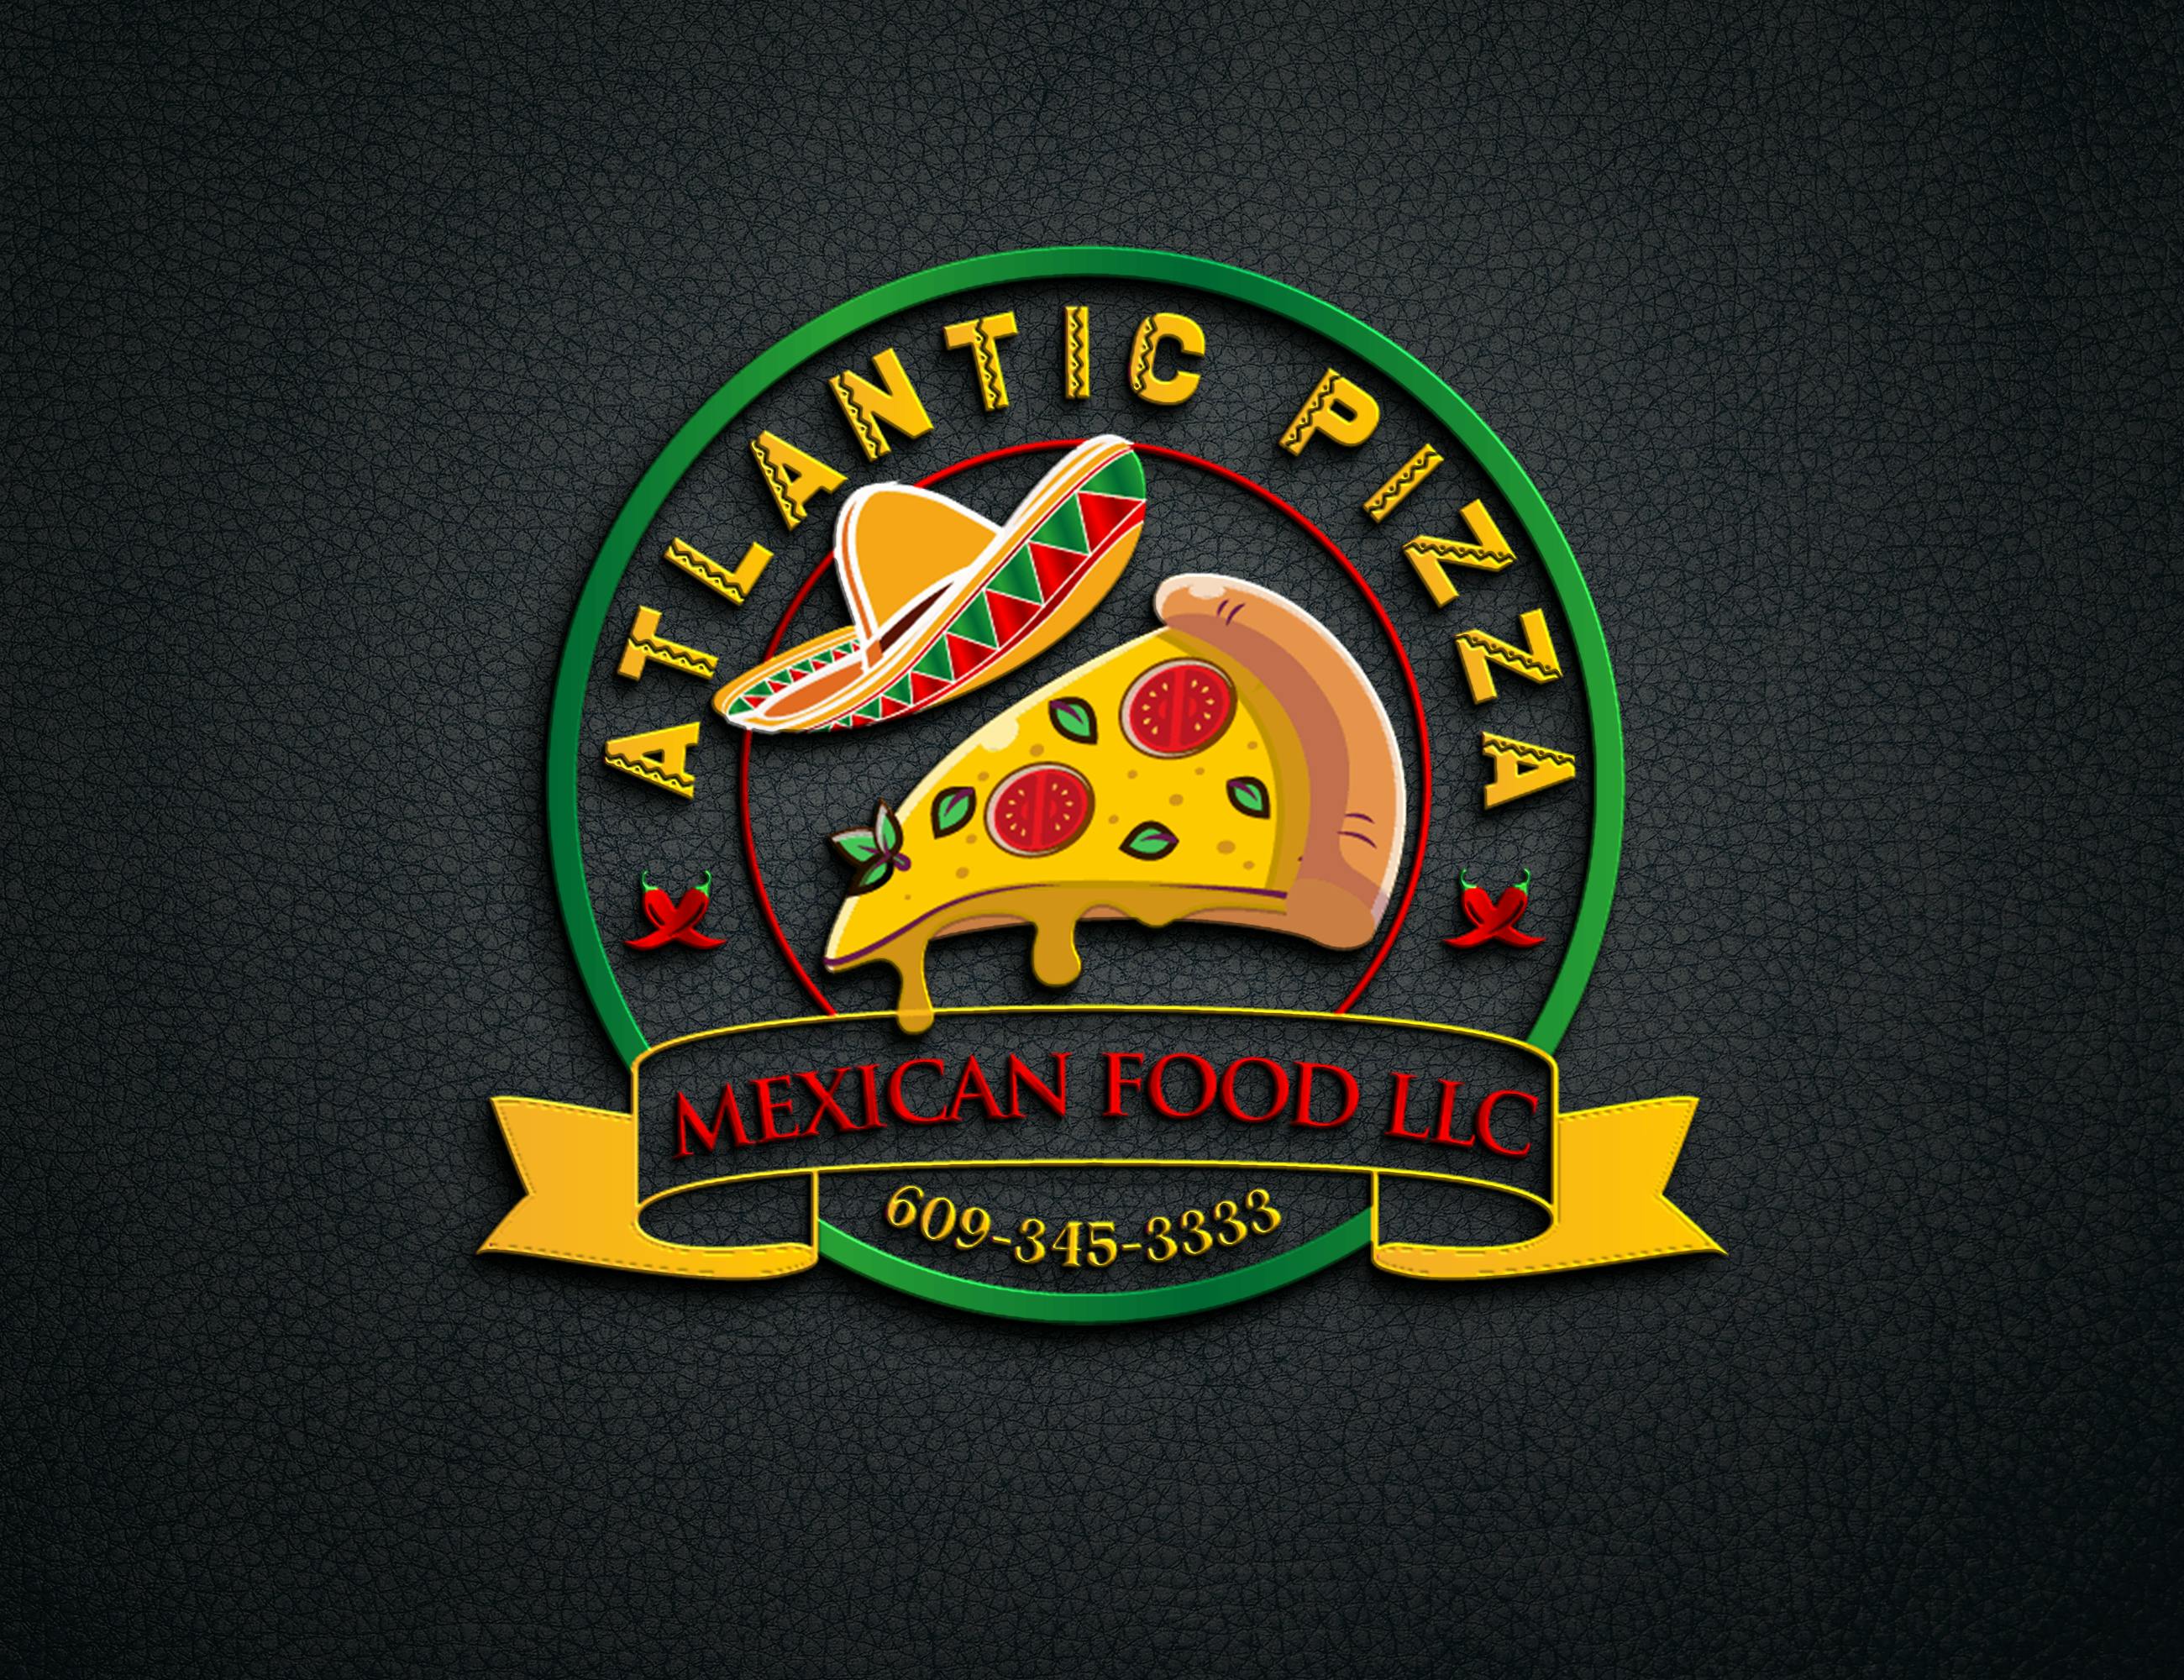 Atlantic Pizza & Authentic Mexican Food Logo